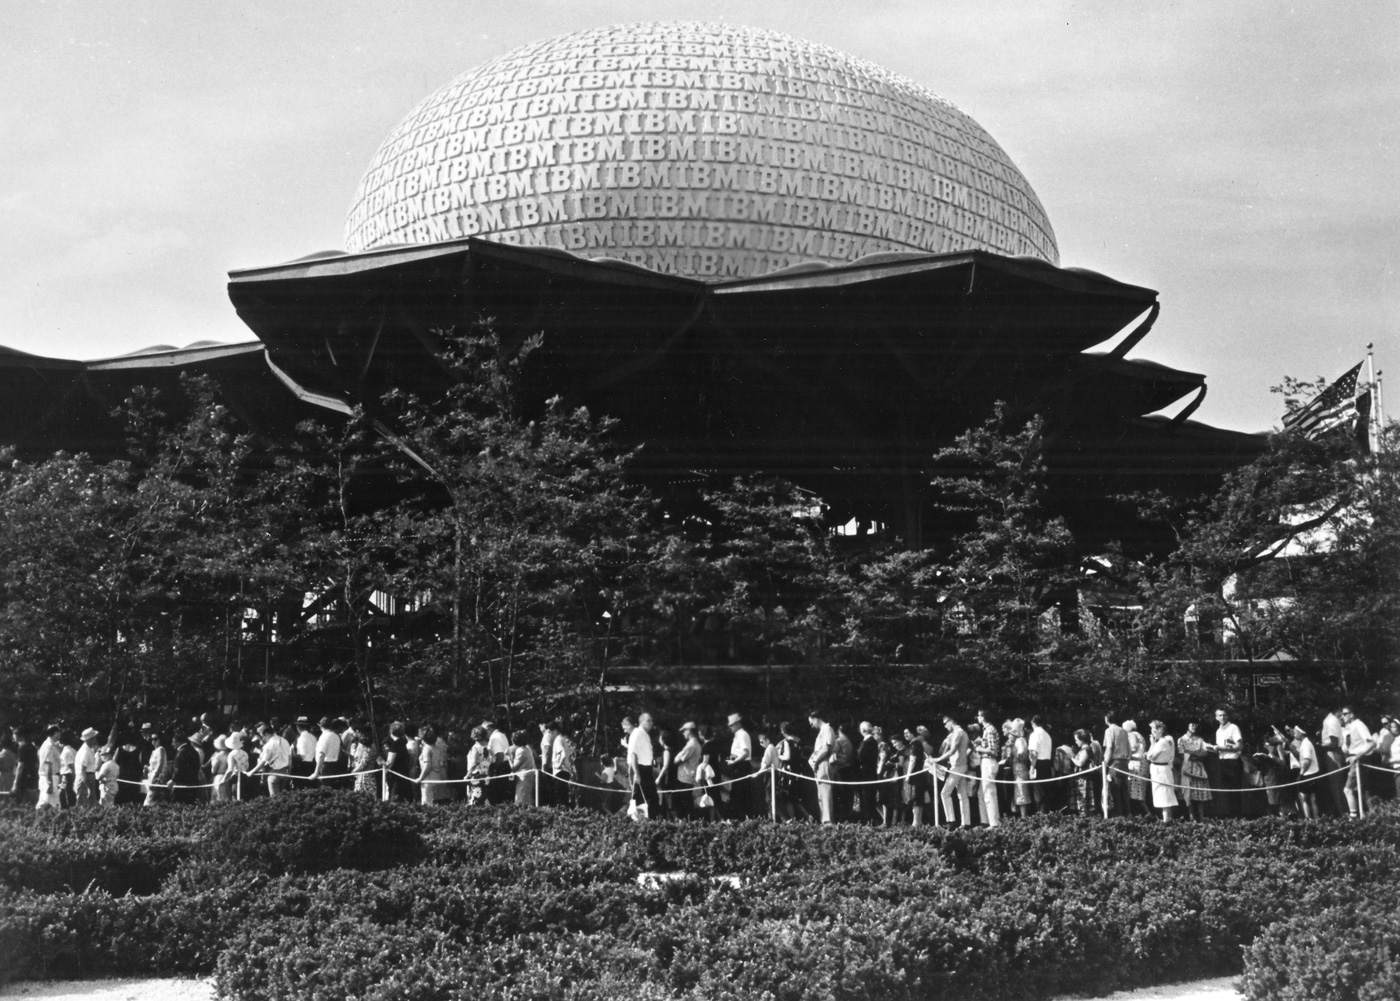 IBM pavilion designed by Paul Rand at the 1964 New York World’s Fair